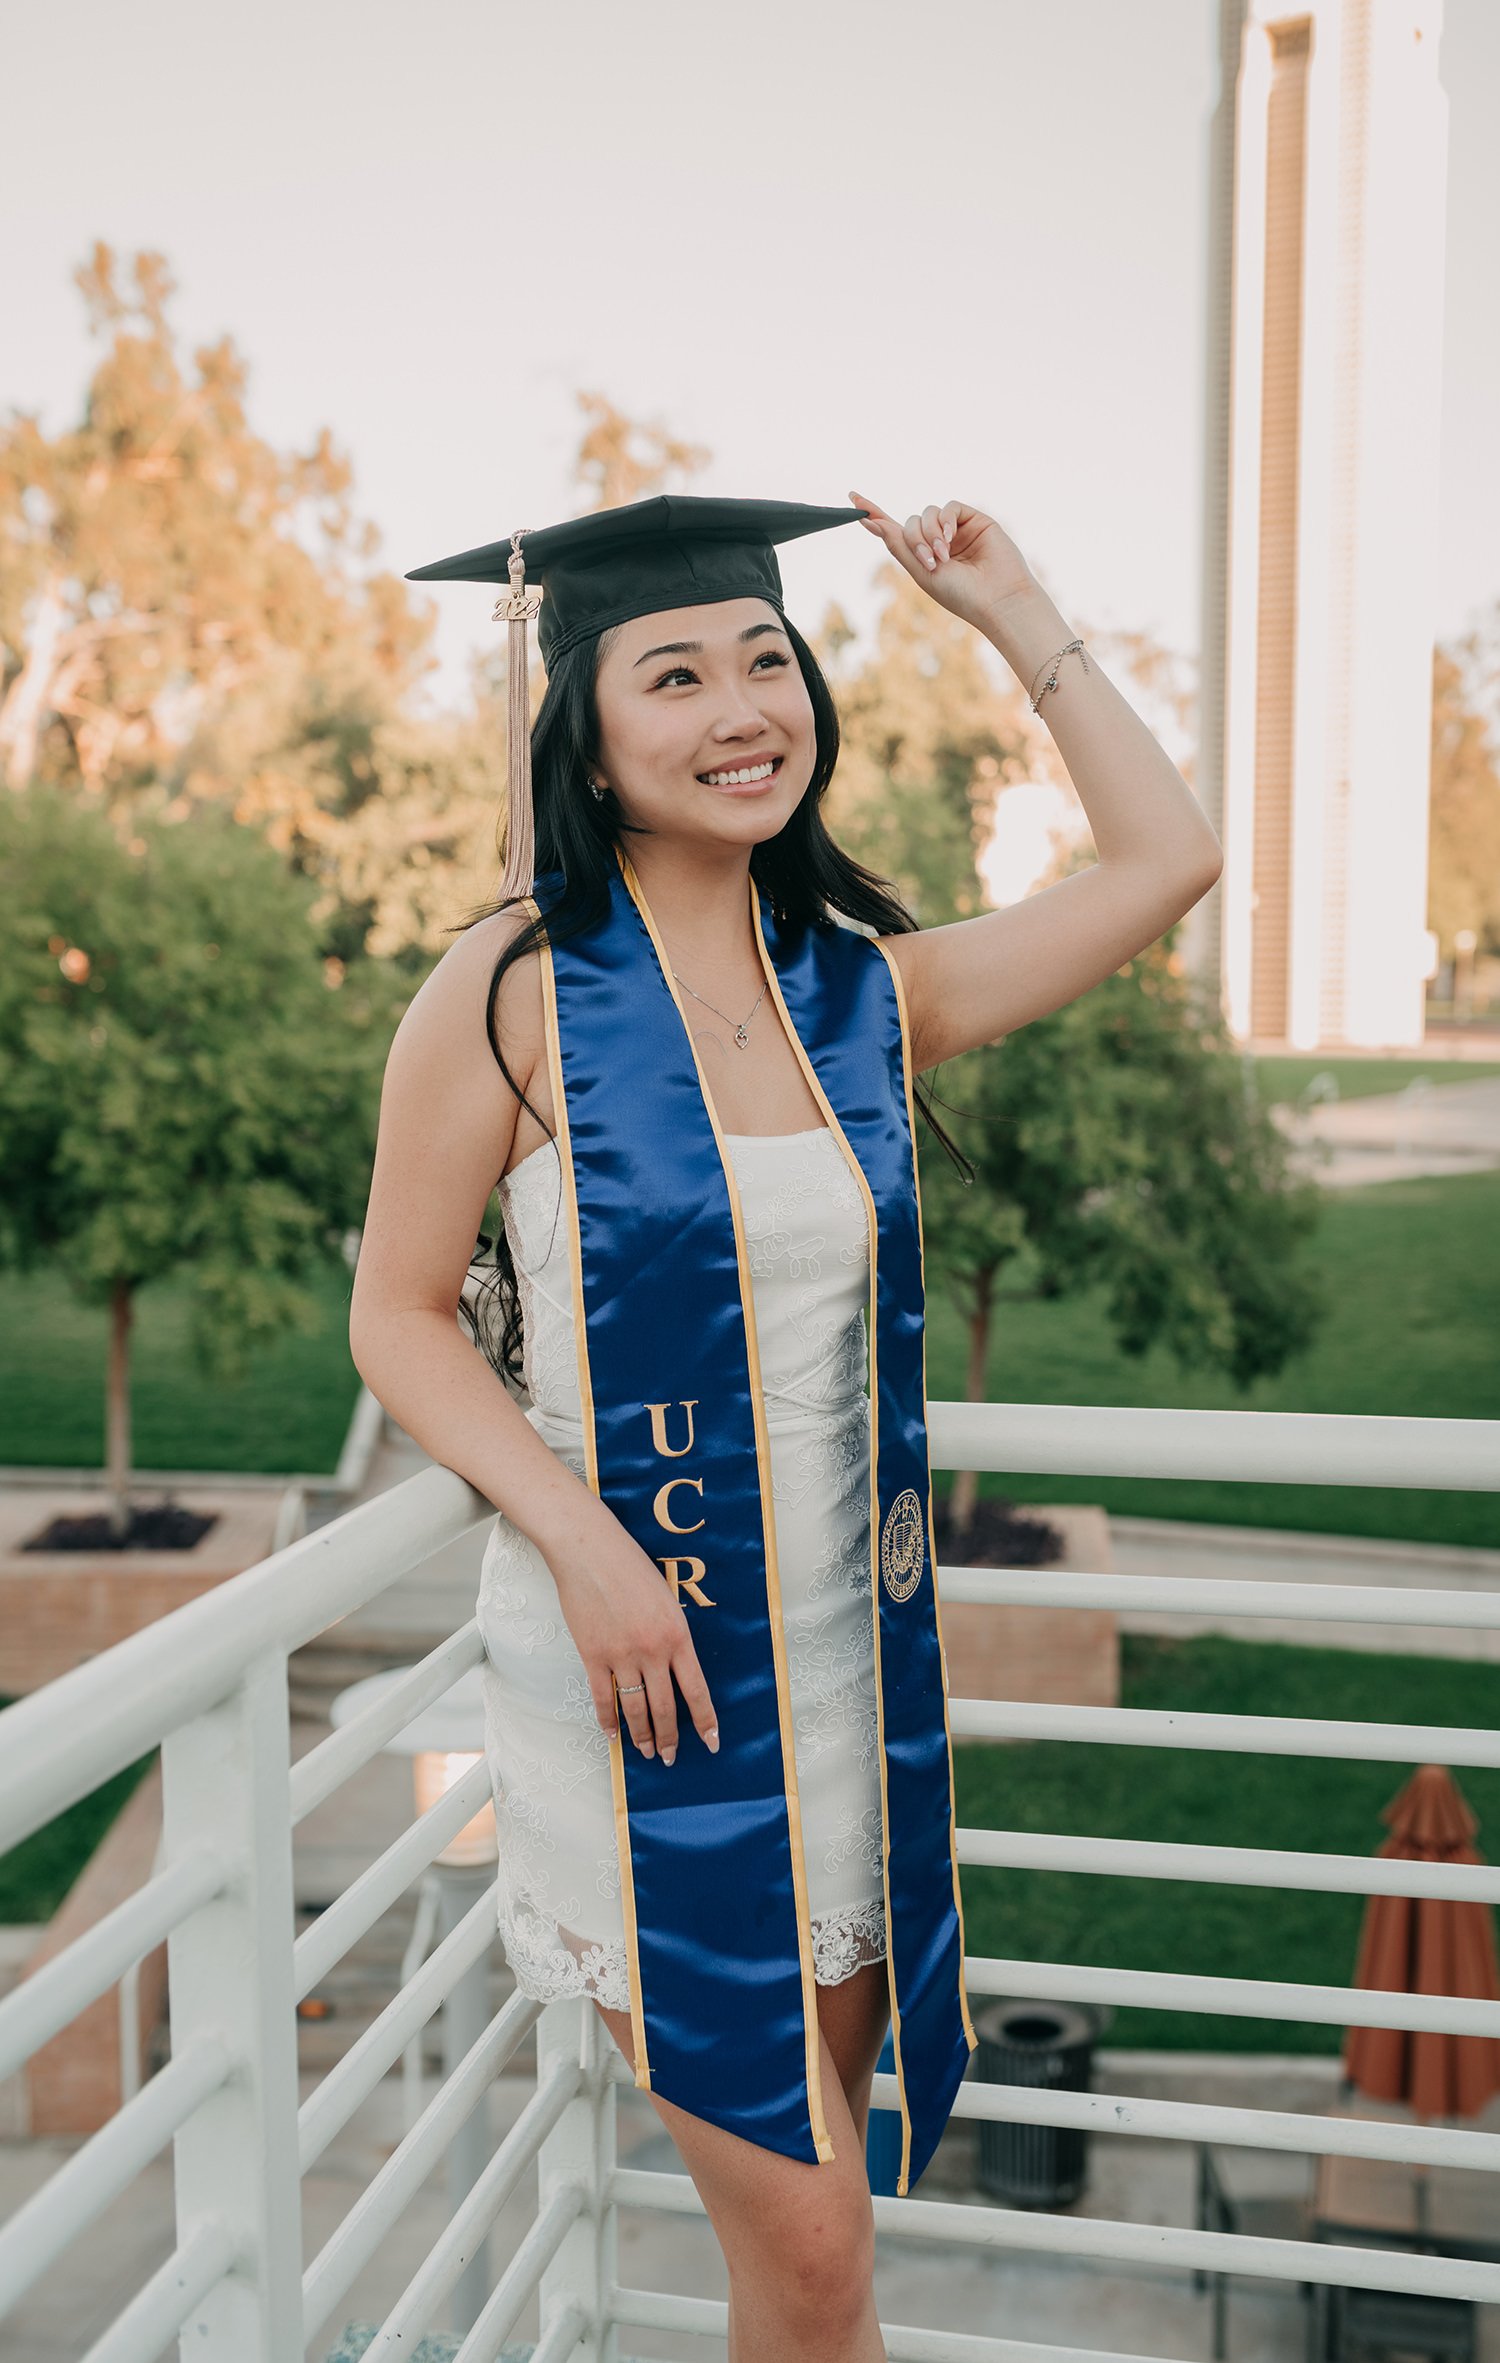 ucr-graduation-portrait-riverside-california-photographer-21.jpg